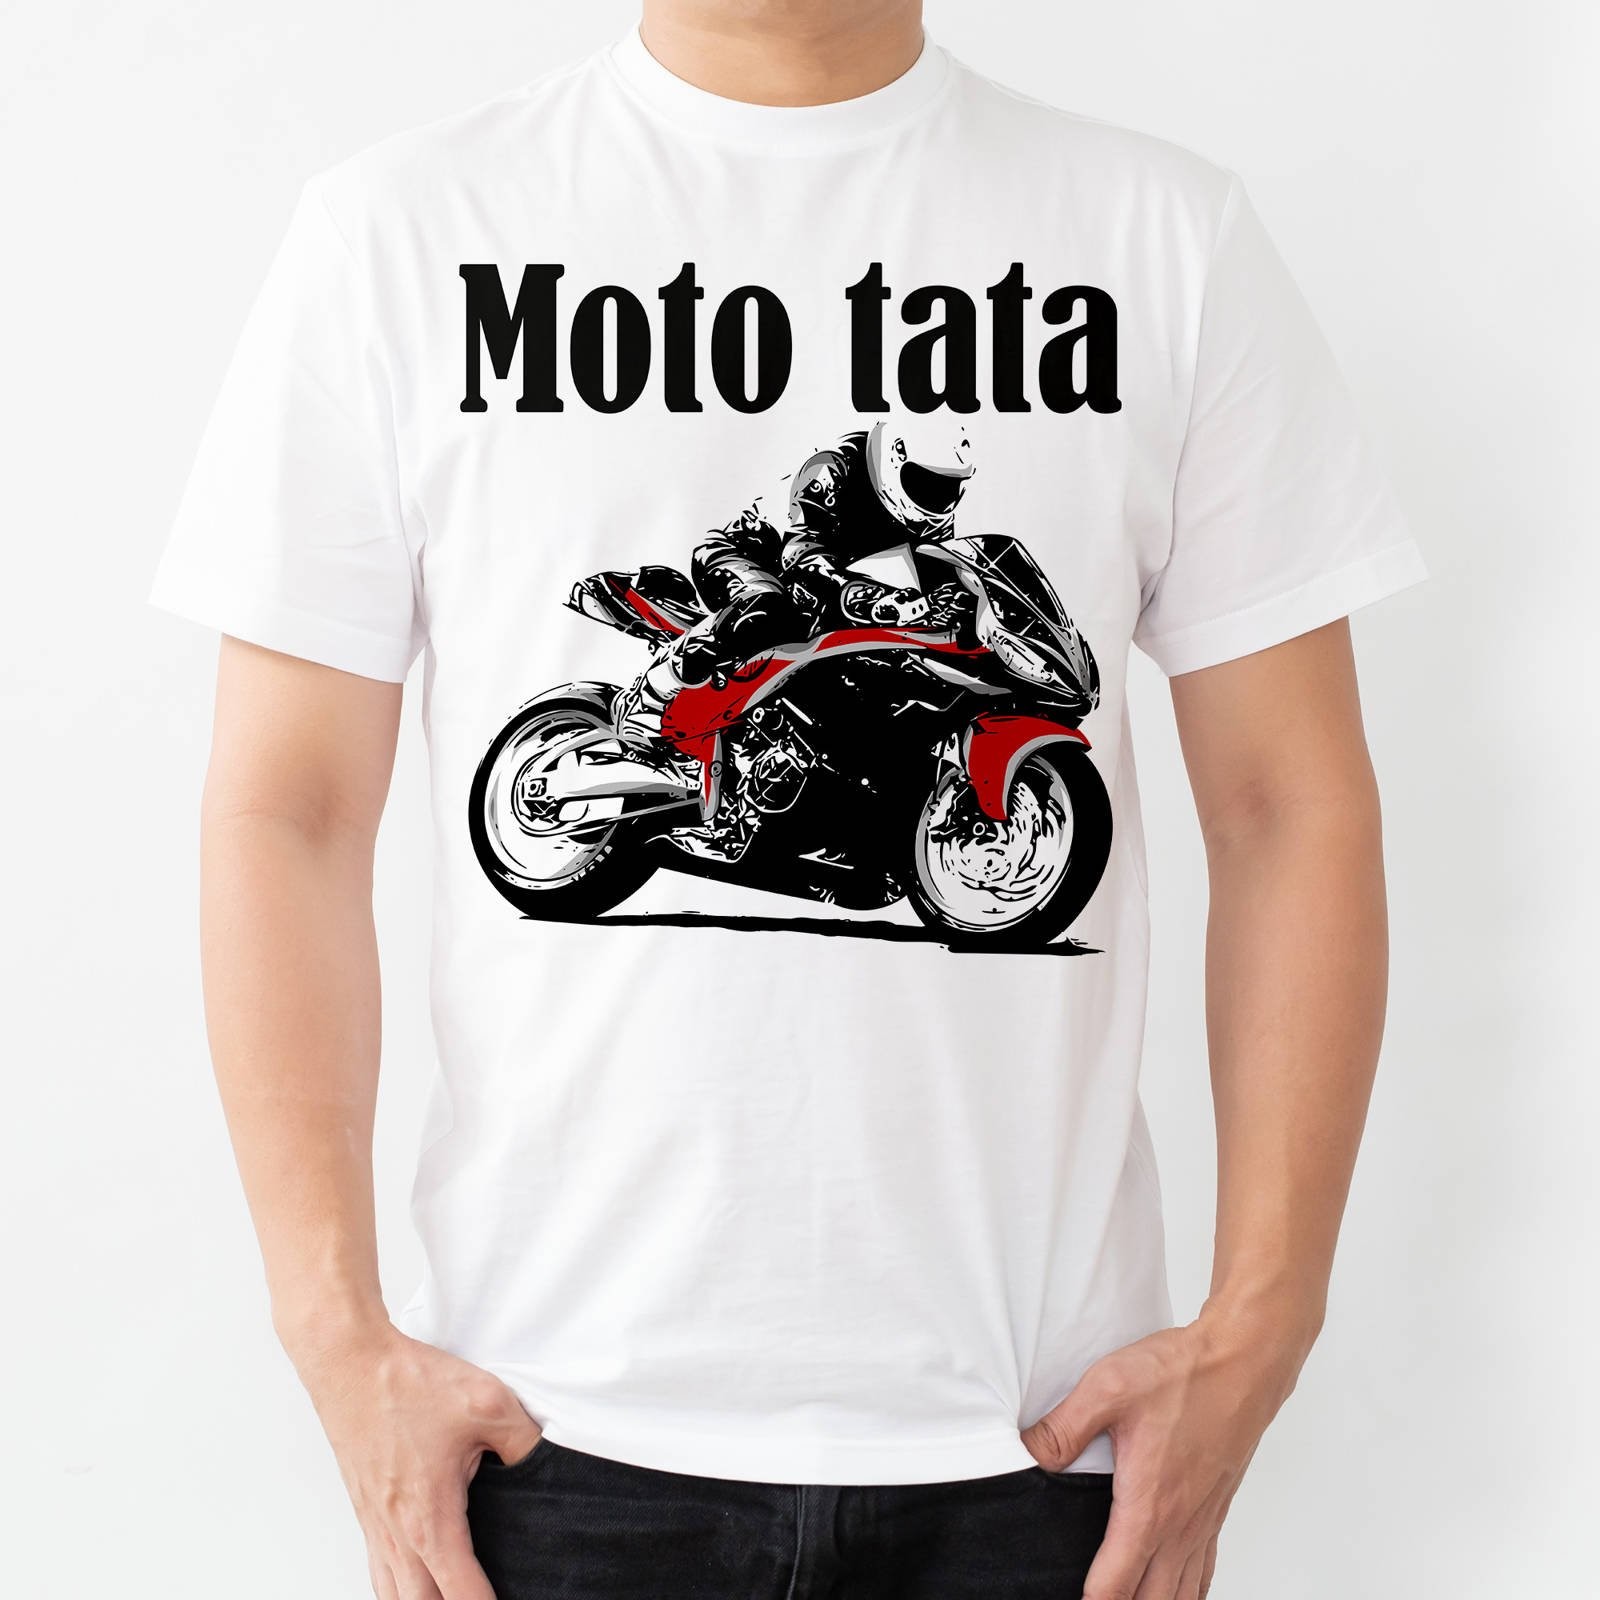 Poczpol Moto tata - koszulka męska 41940-A